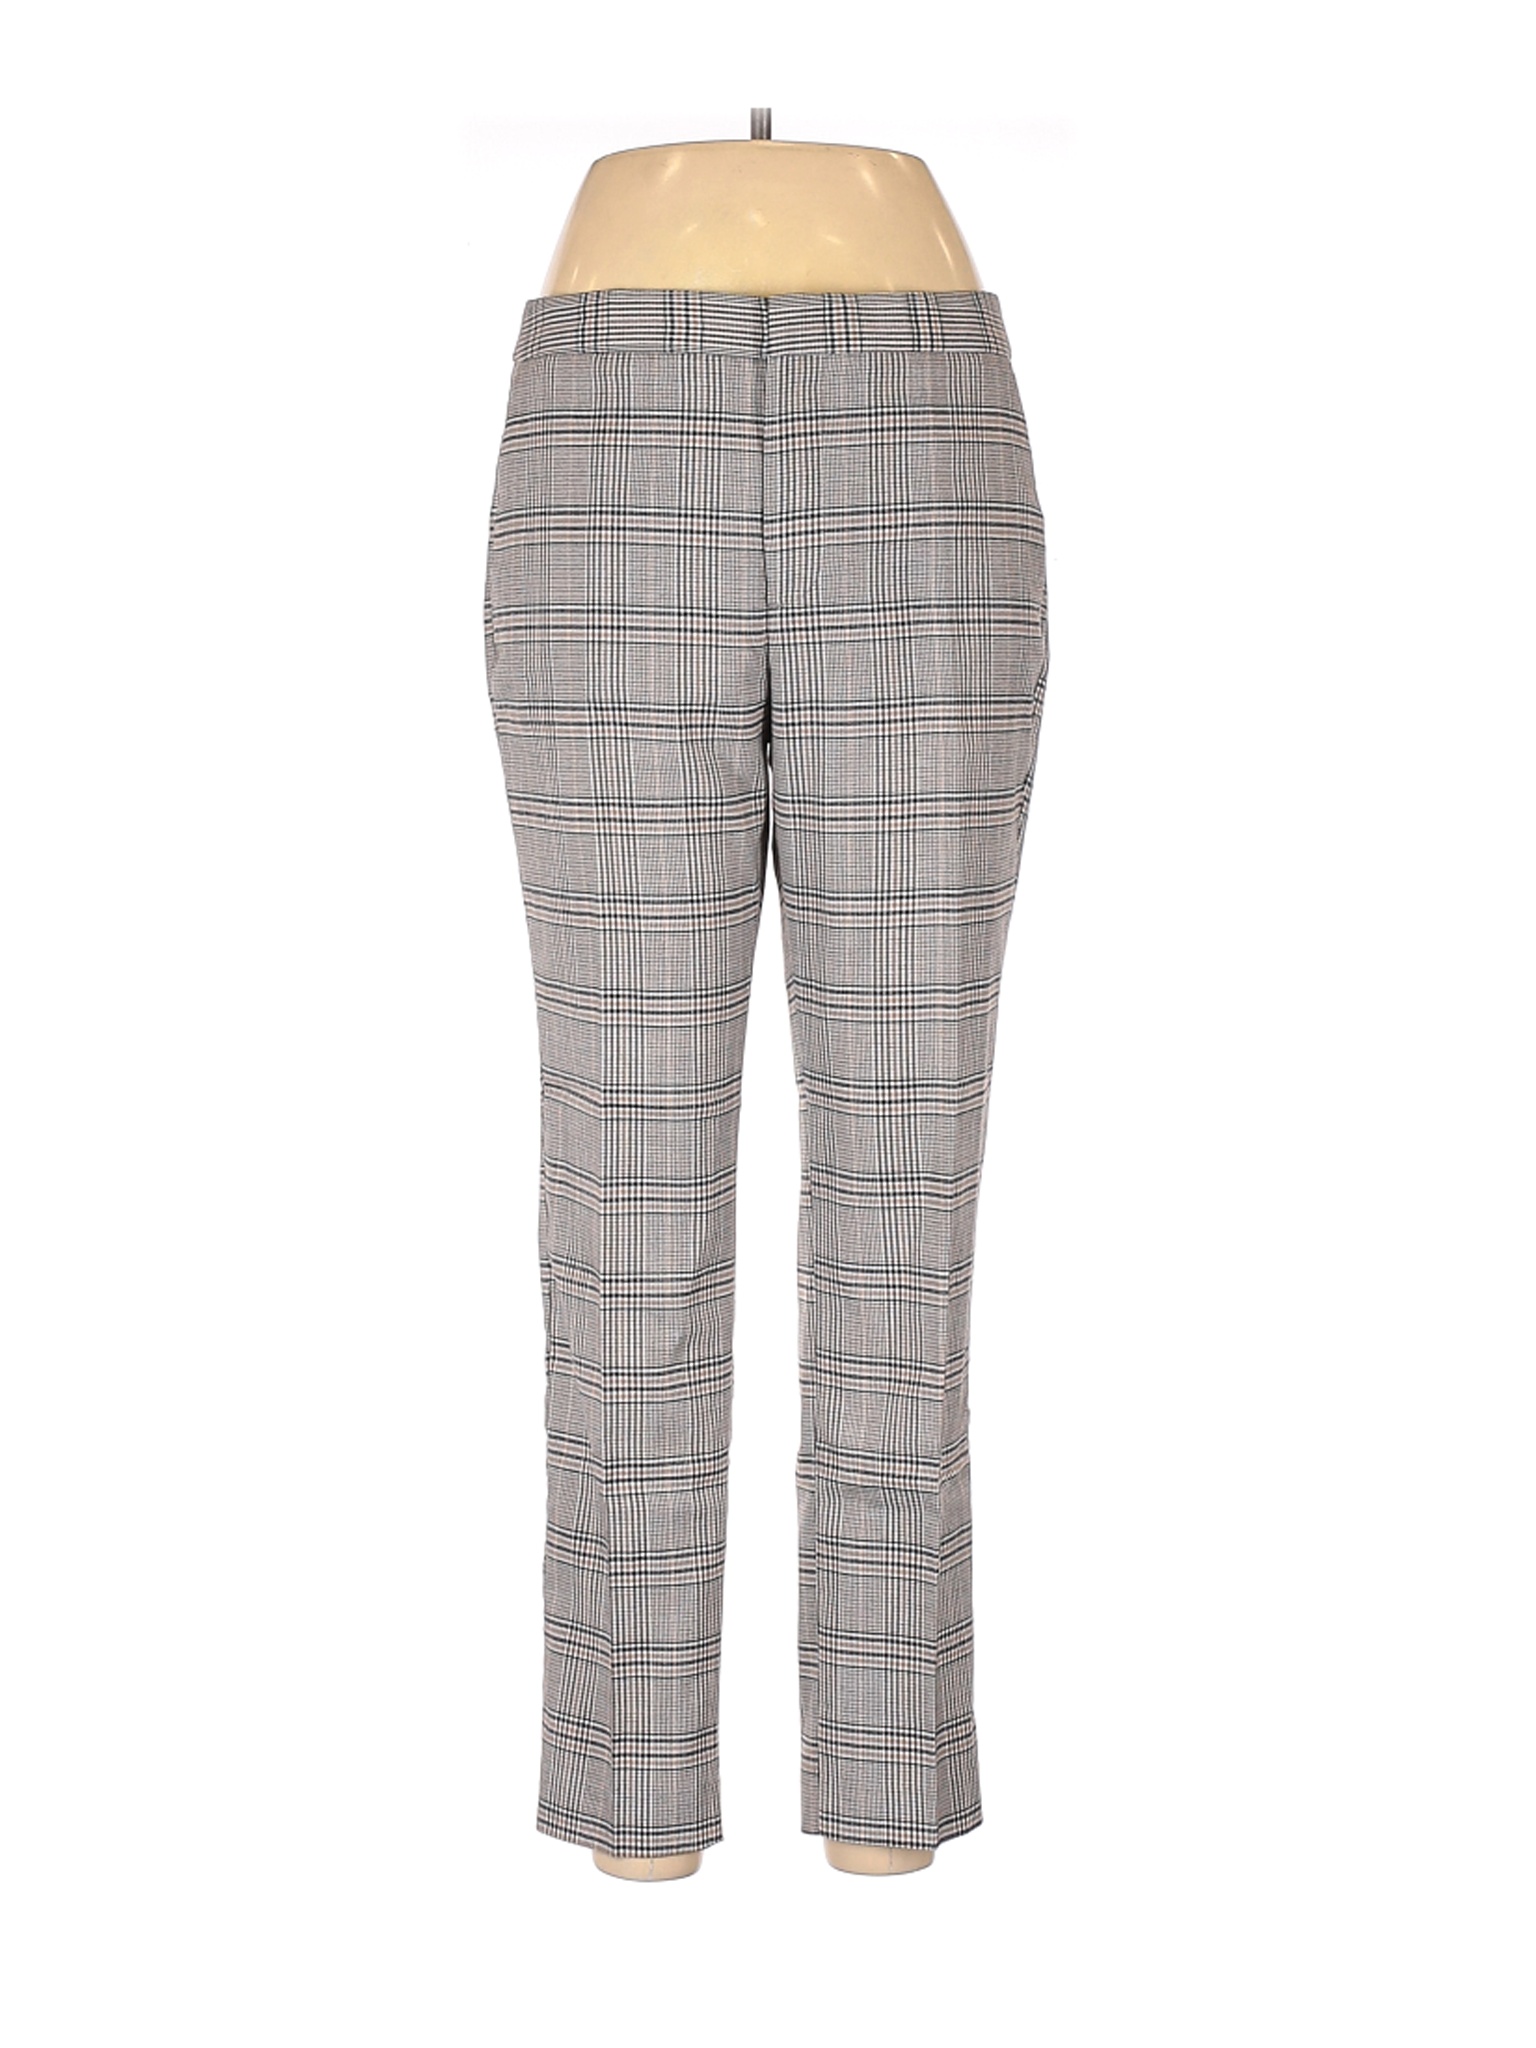 Zara Women Gray Dress Pants 6 | eBay